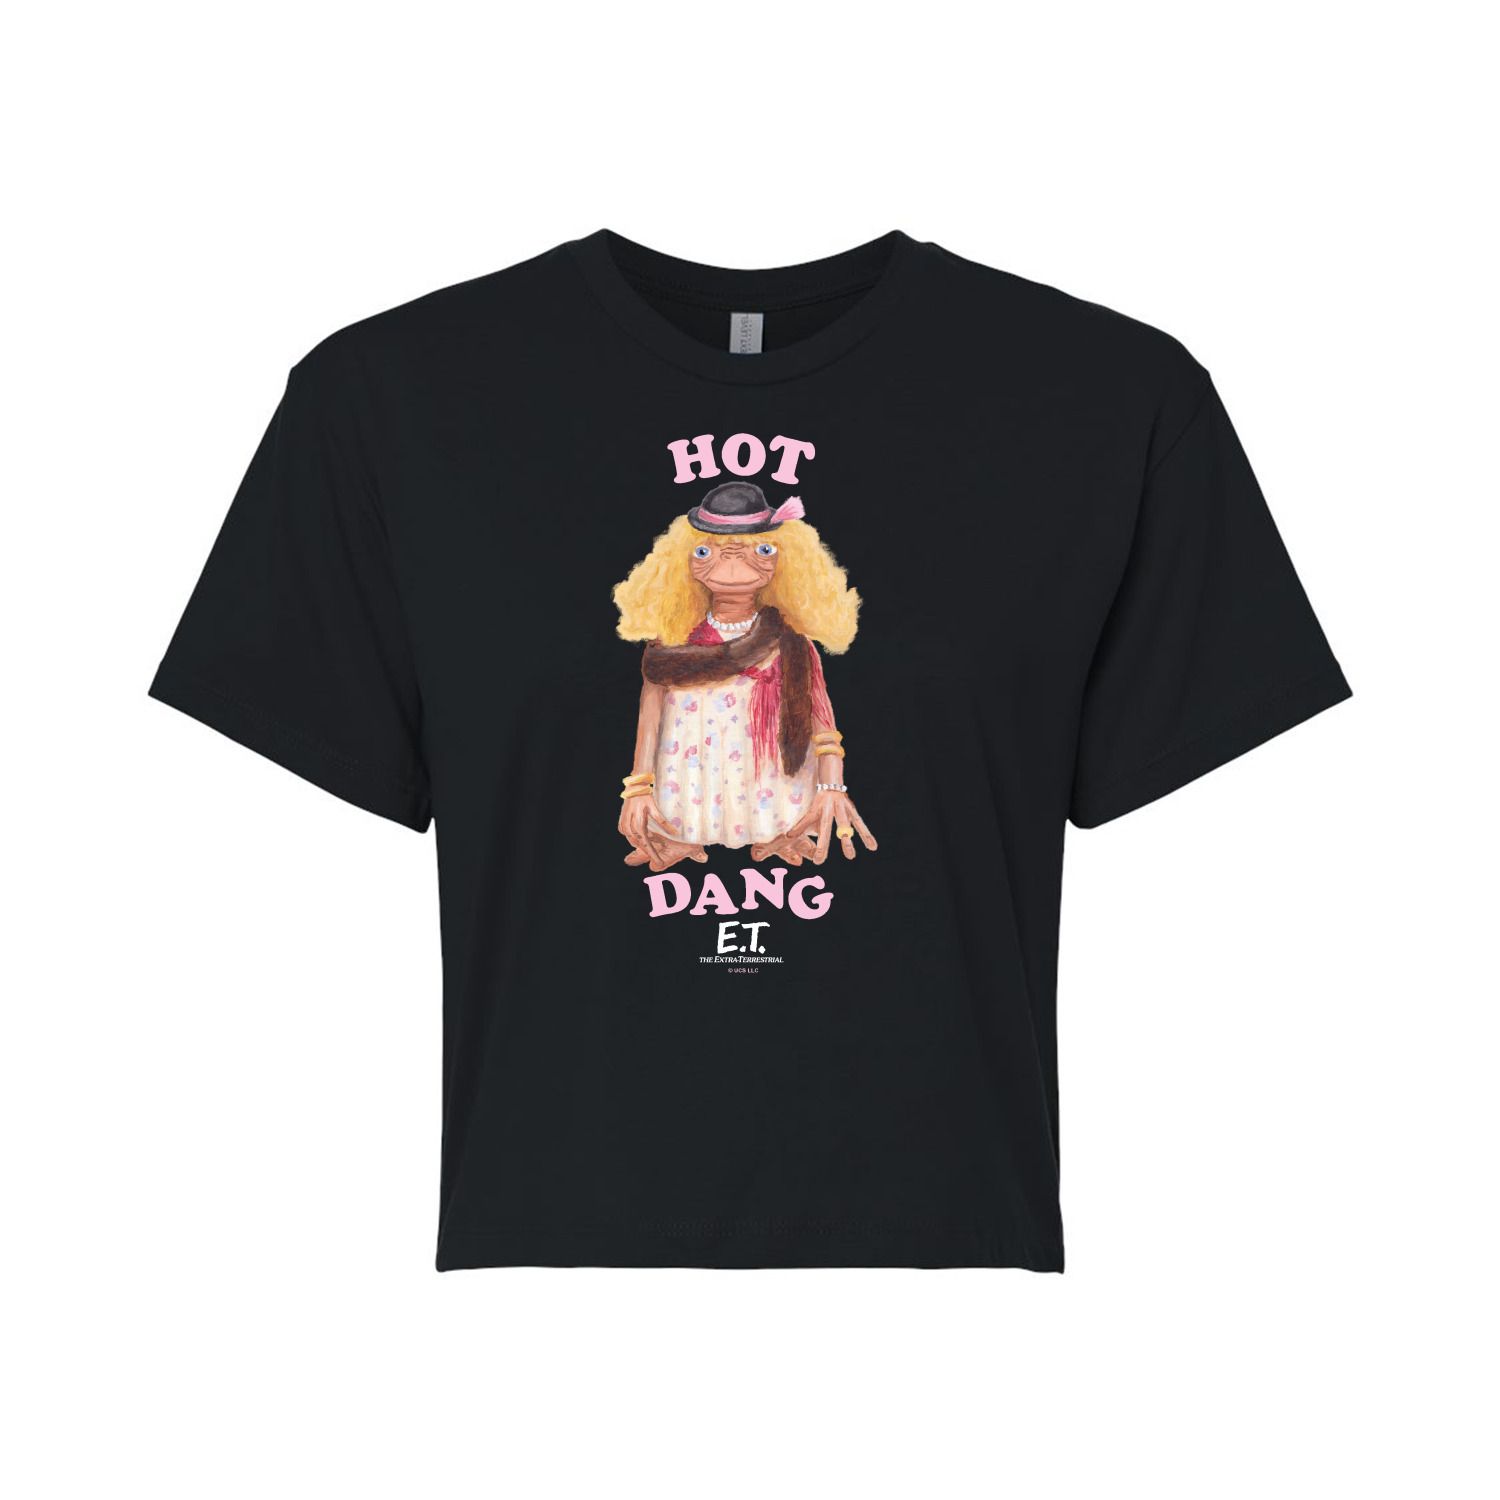 Юниоры E.T. Укороченная футболка с рисунком Hot Dang Licensed Character юниоры e t укороченная футболка с рисунком shine together licensed character белый